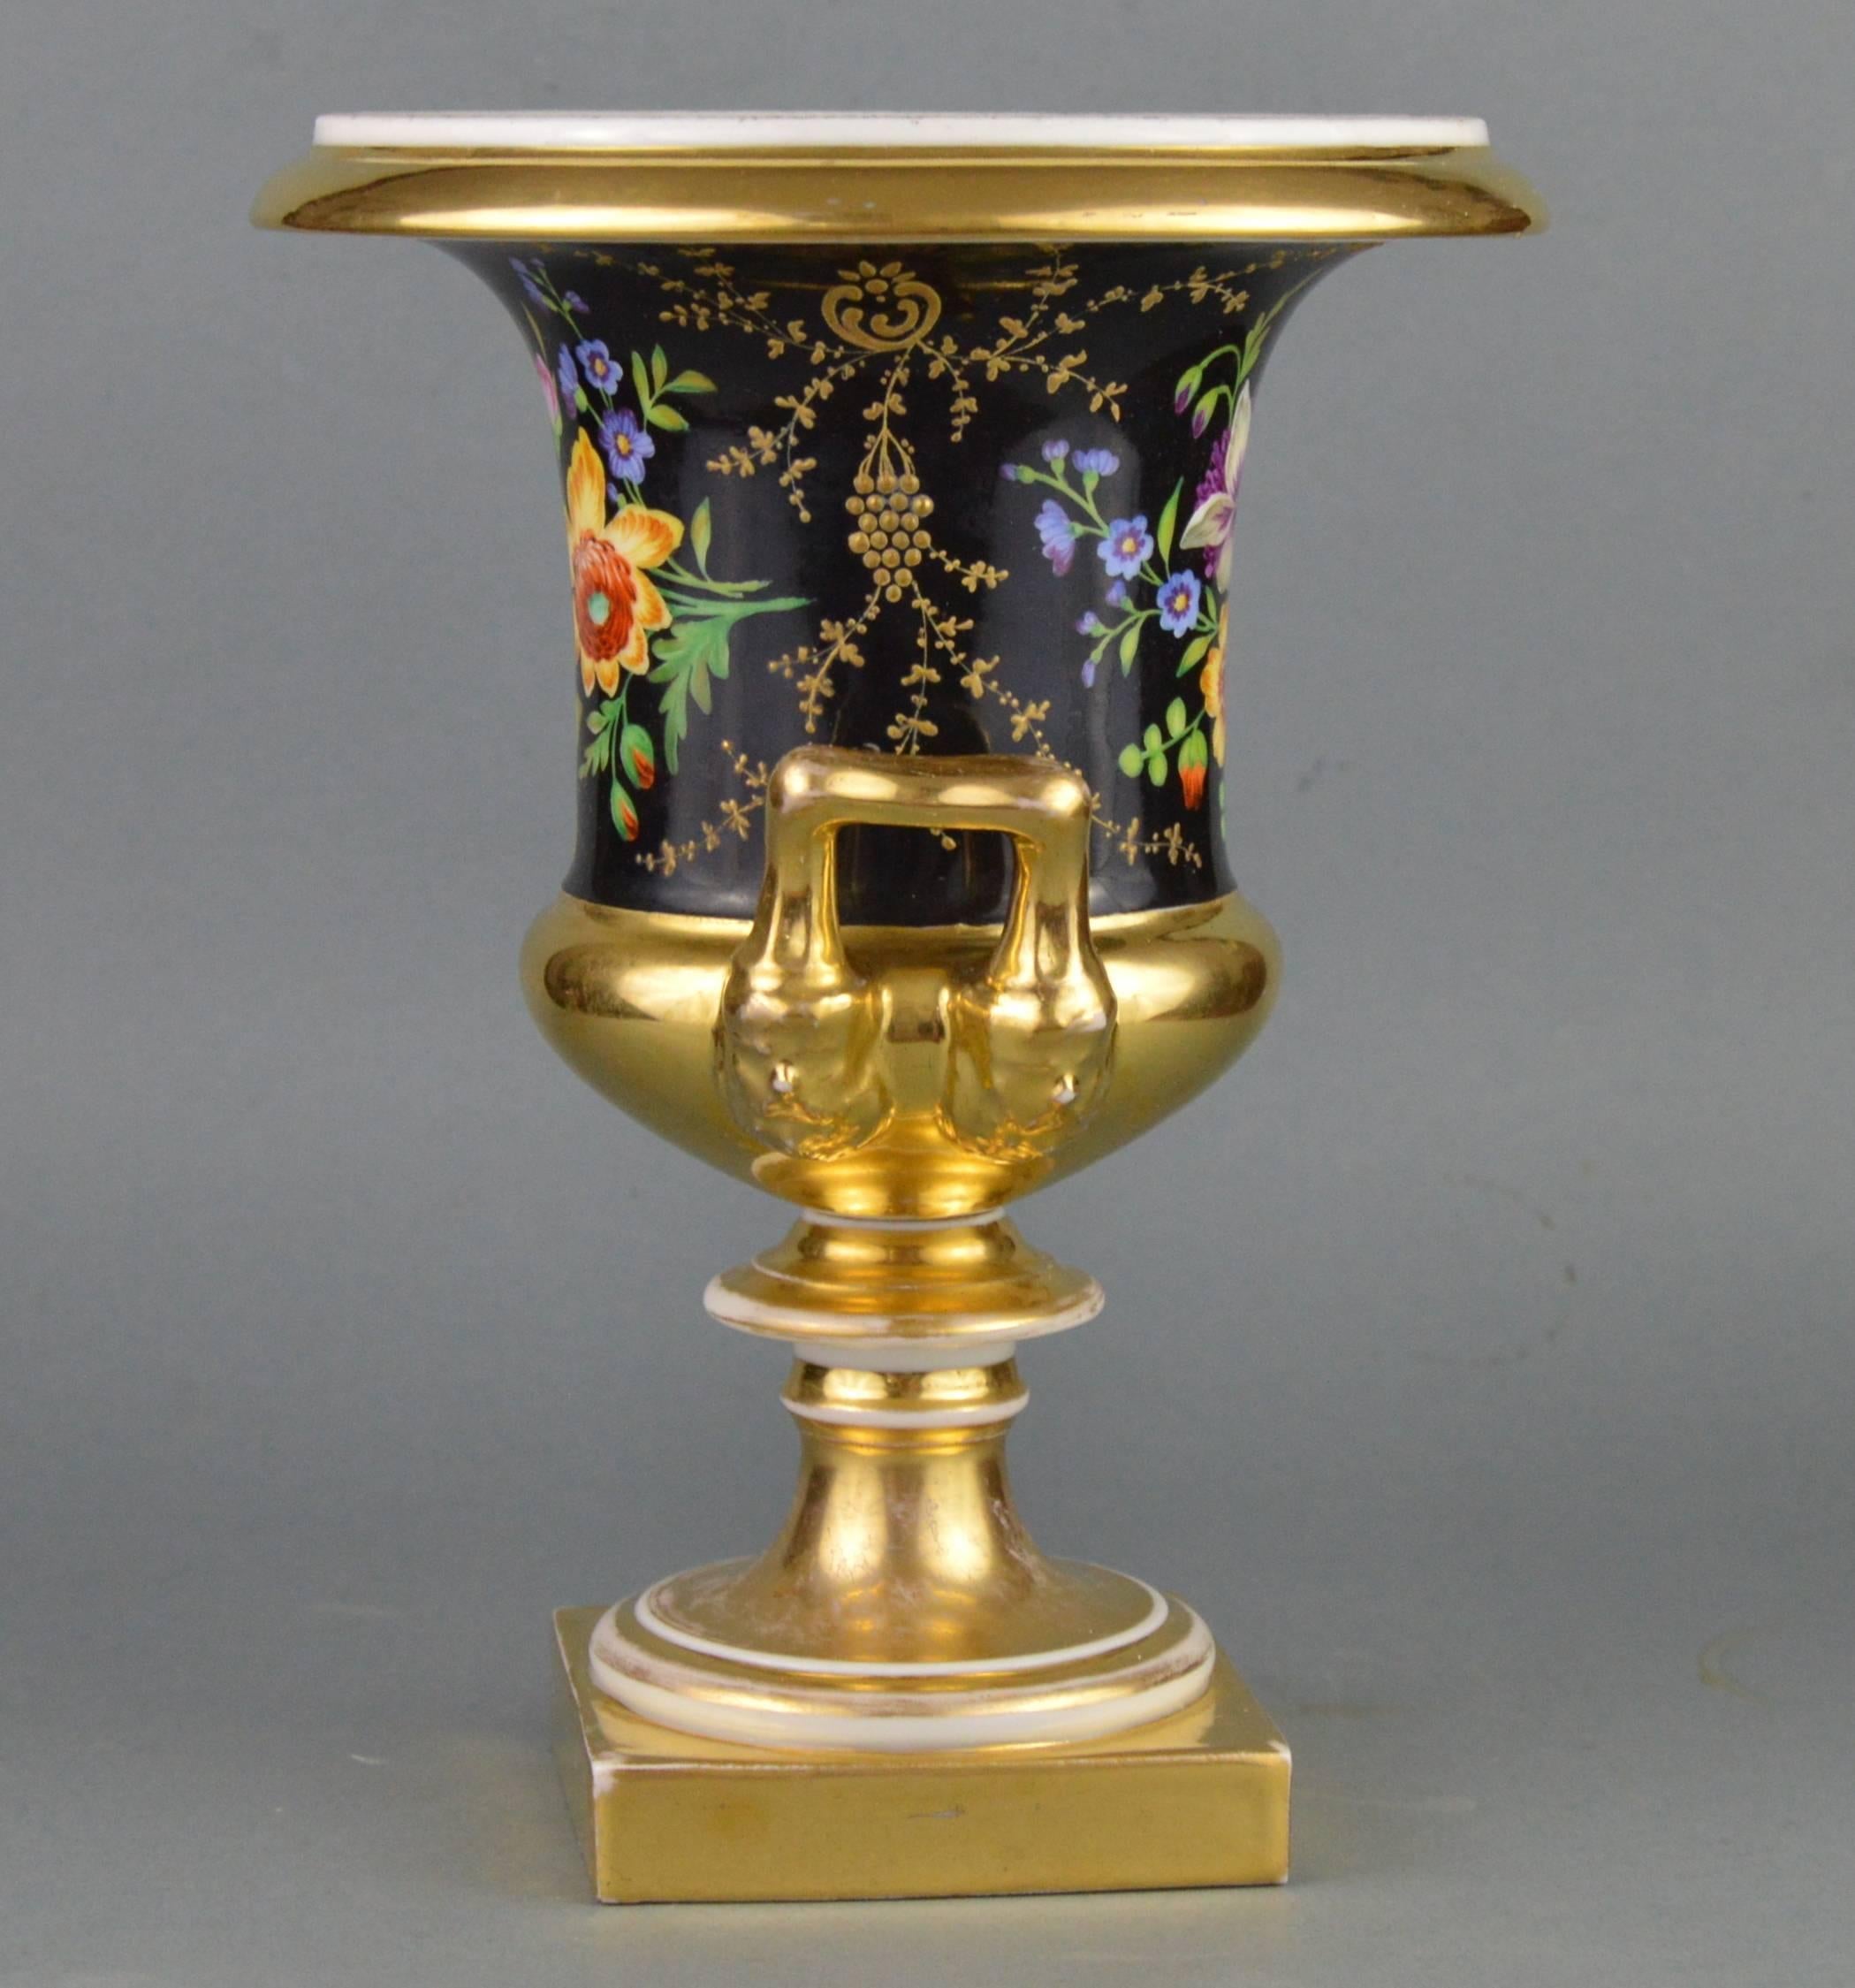 Empire Revival Medici Porcelain Vase Hand-Painted Flower Ornamented Decoration, 1820-1840